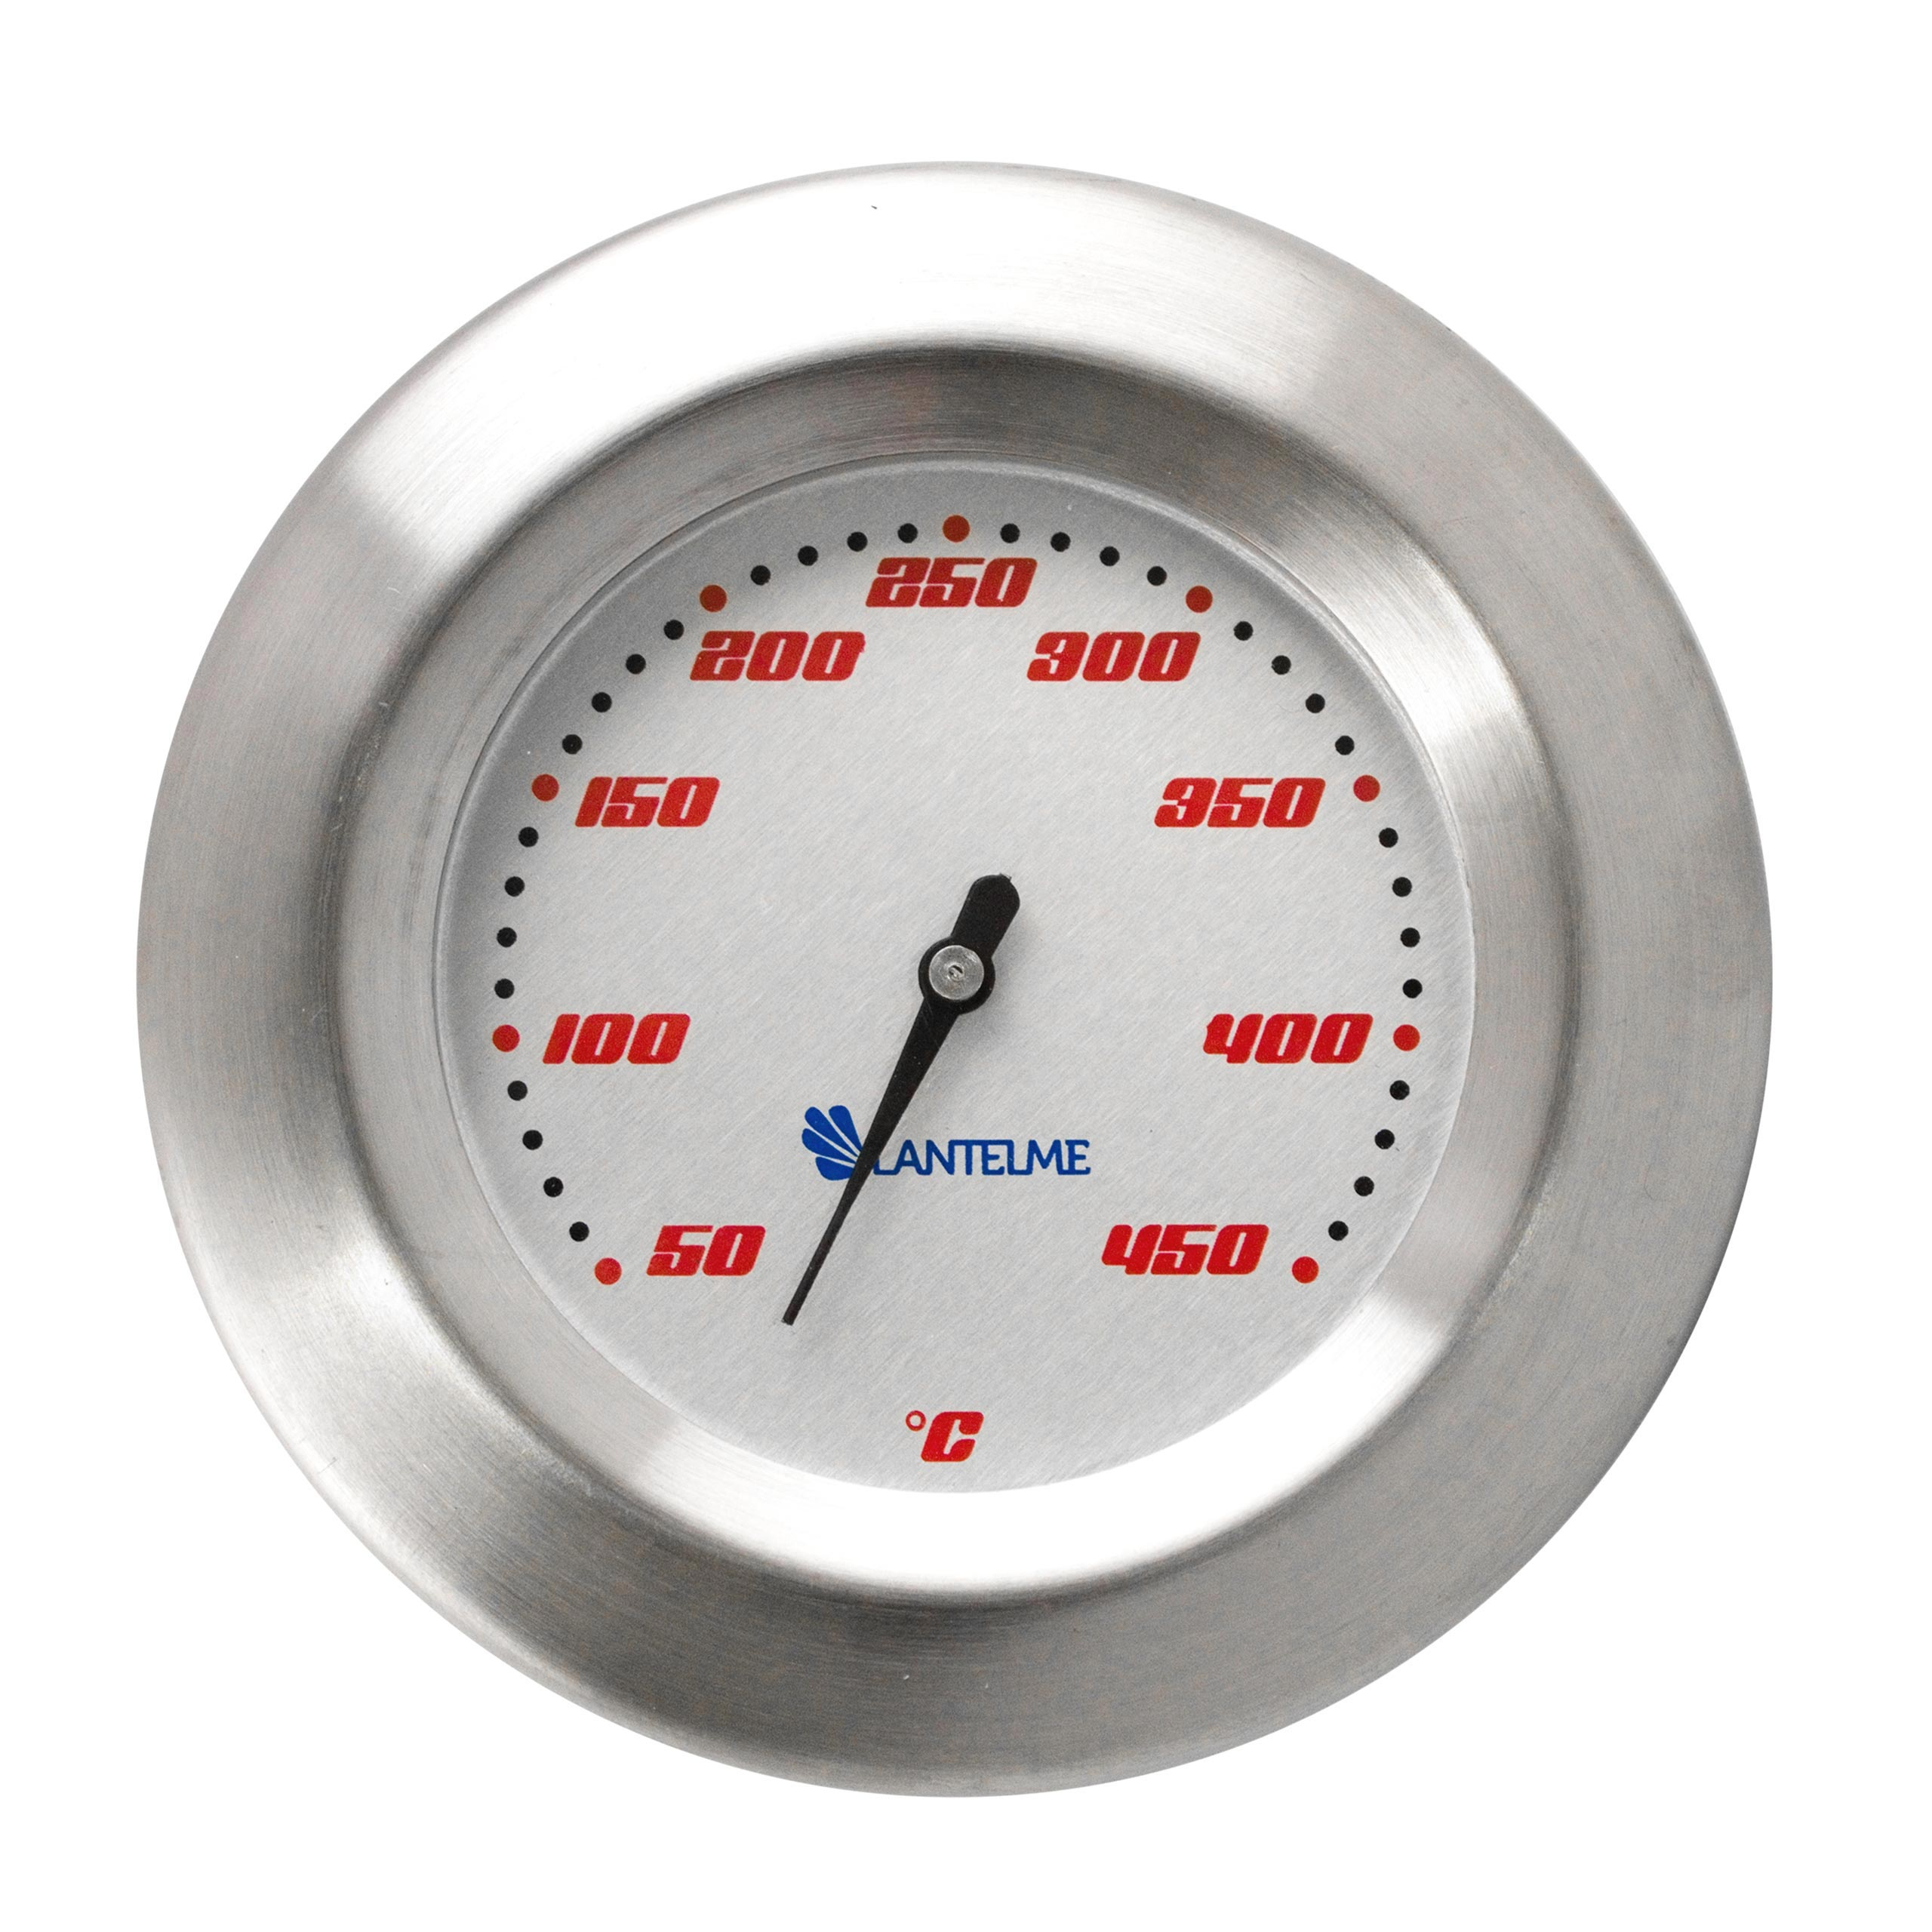 Grill Thermometer, LANTELME Smoker & Silber Deckel